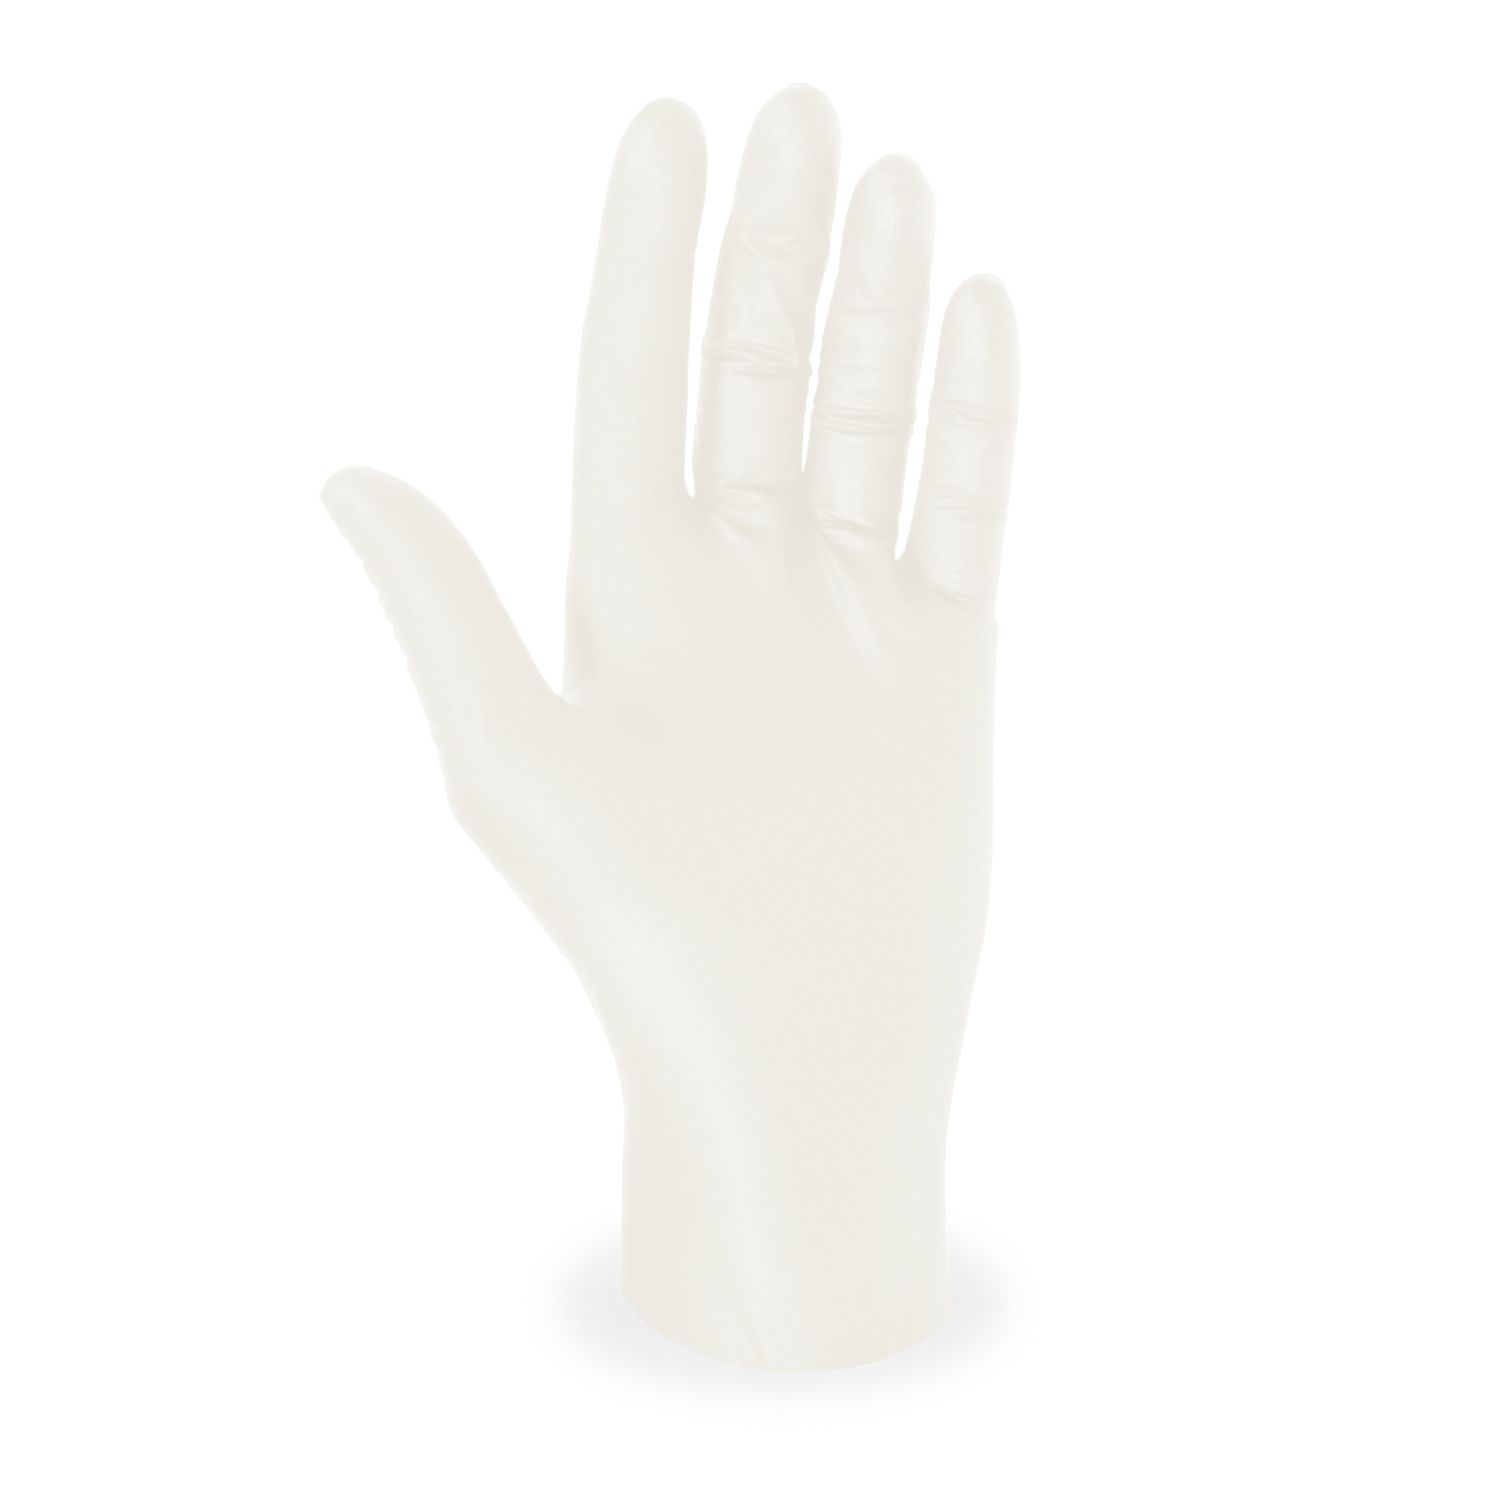 Handschuh (Latex) ungepudert weiß L - 100 Stück